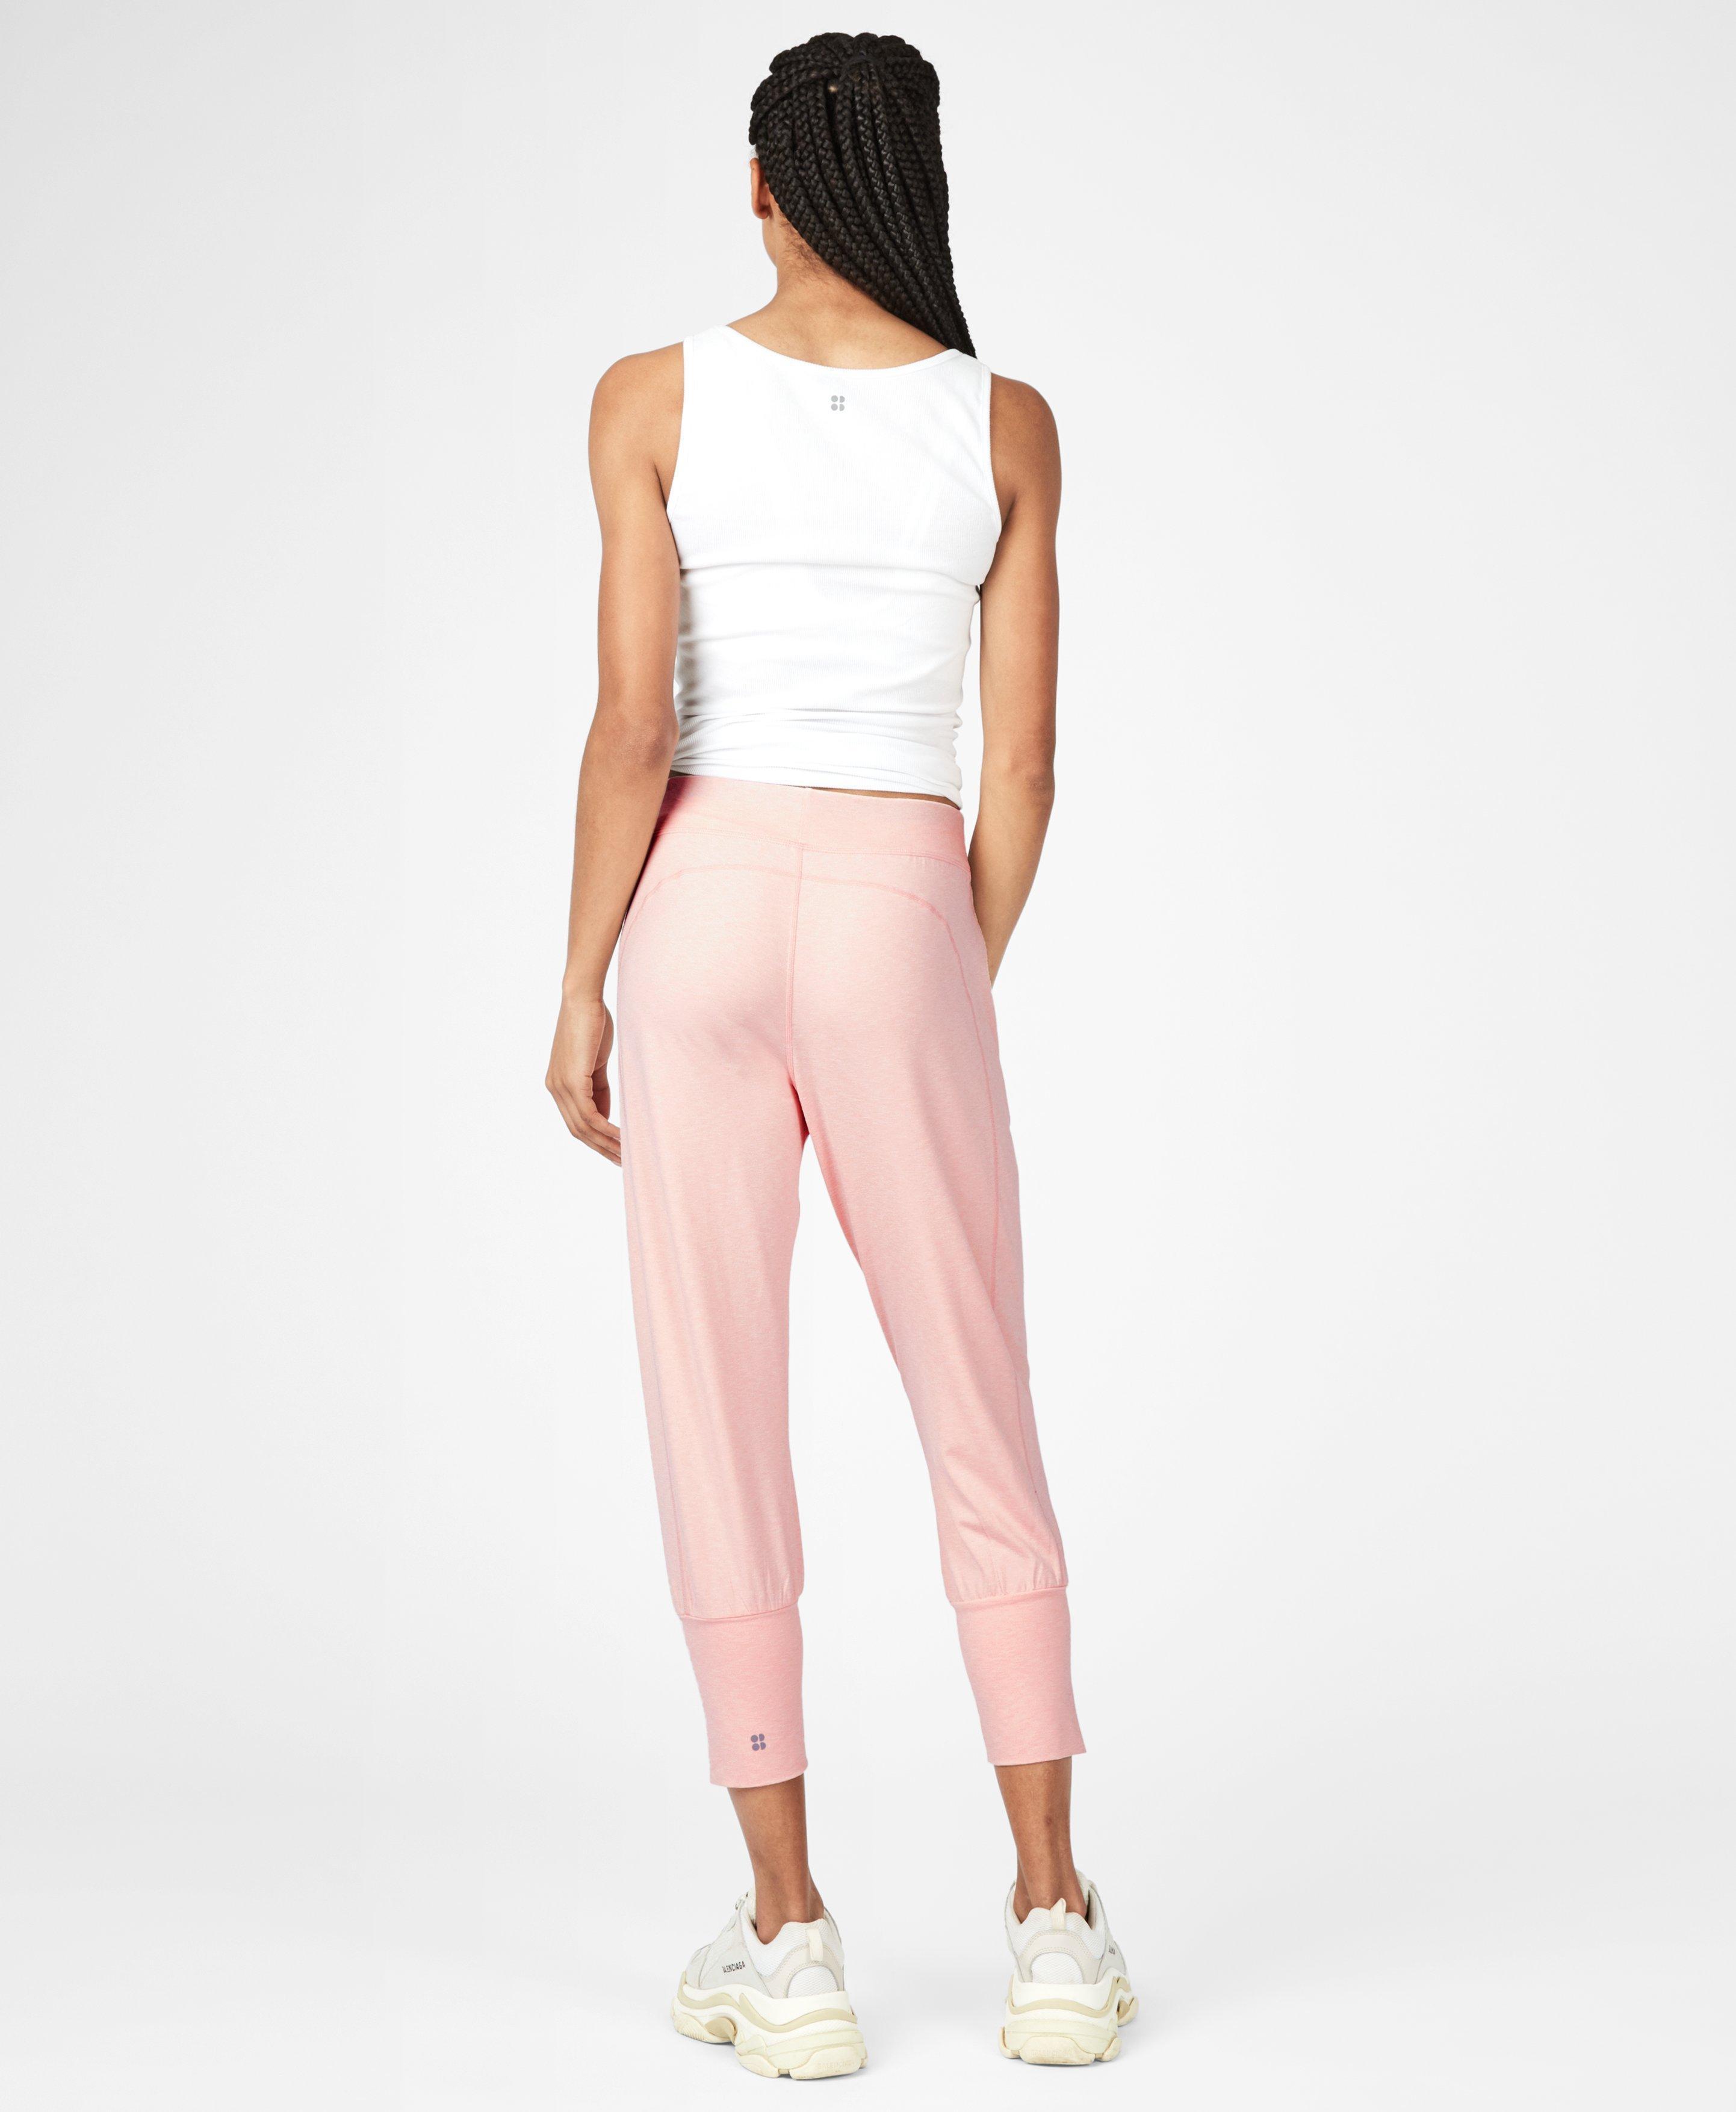 Sweaty Betty Garudasana Cropped Yoga Pants in Pink Lyst